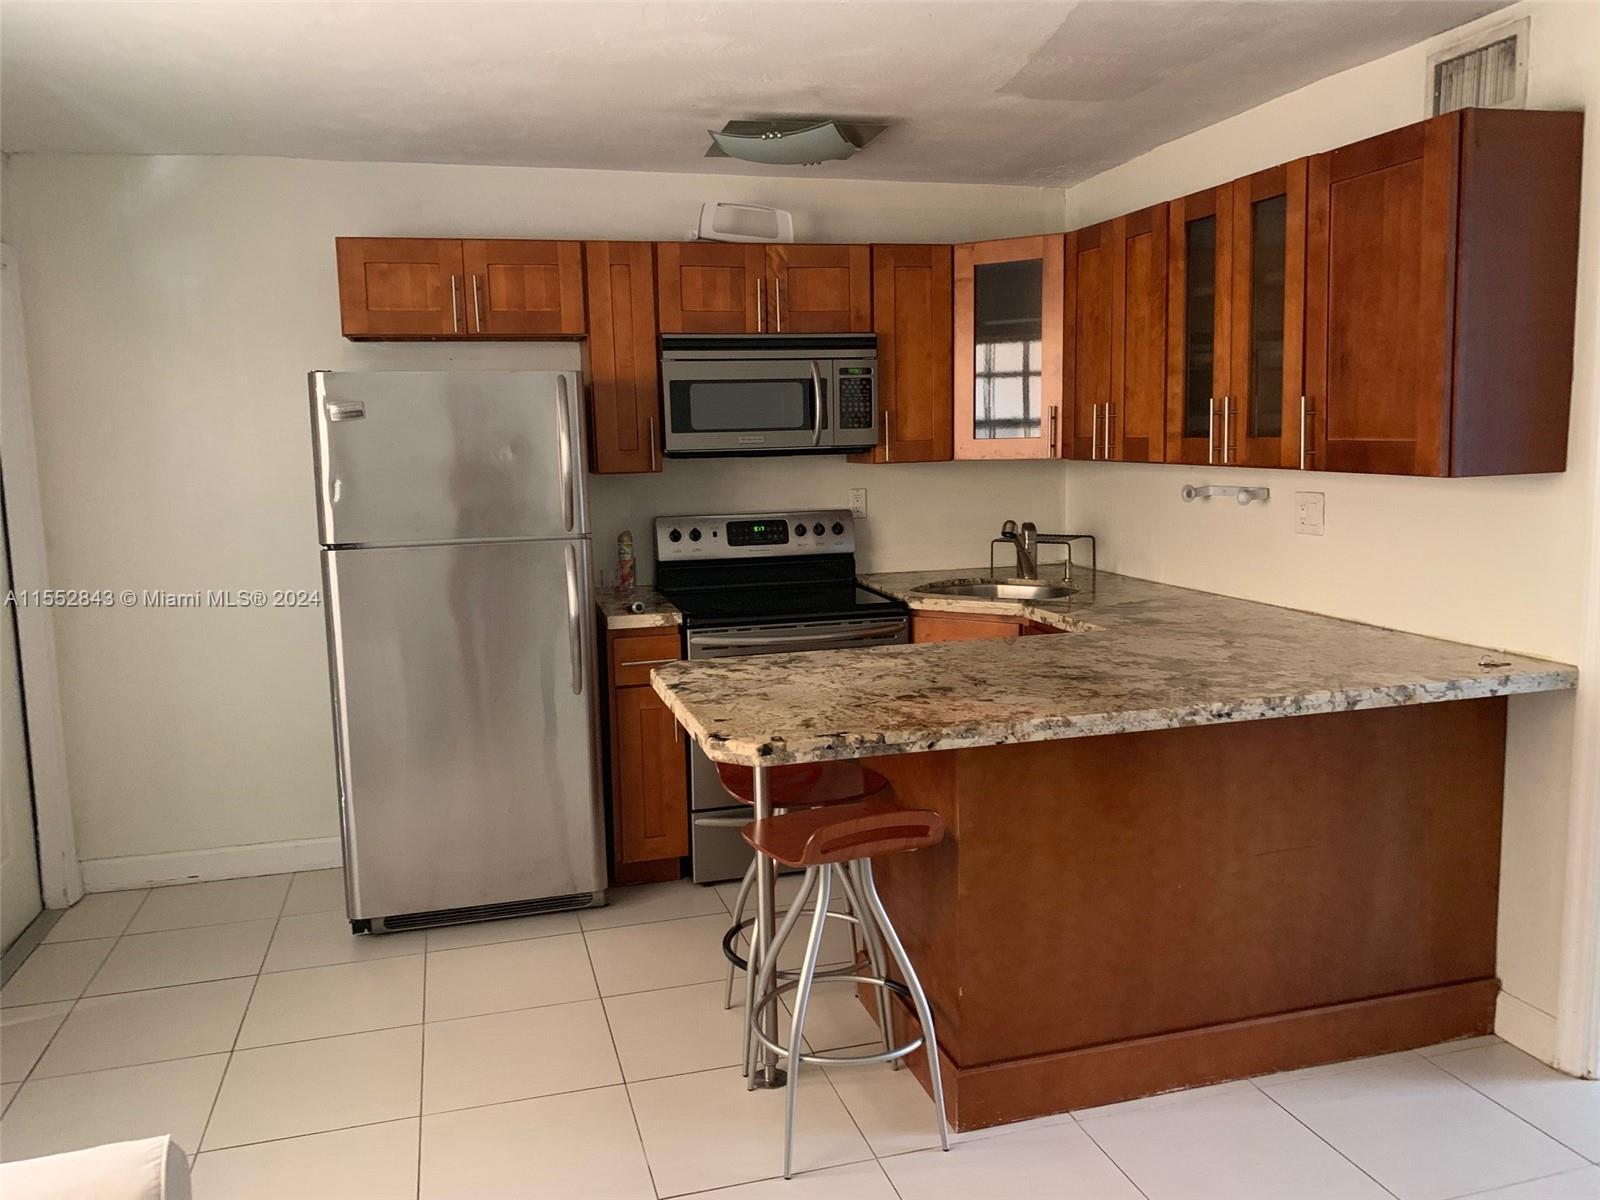 Rental Property at 345 Michigan Ave 28, Miami Beach, Miami-Dade County, Florida - Bedrooms: 1 
Bathrooms: 1  - $2,000 MO.